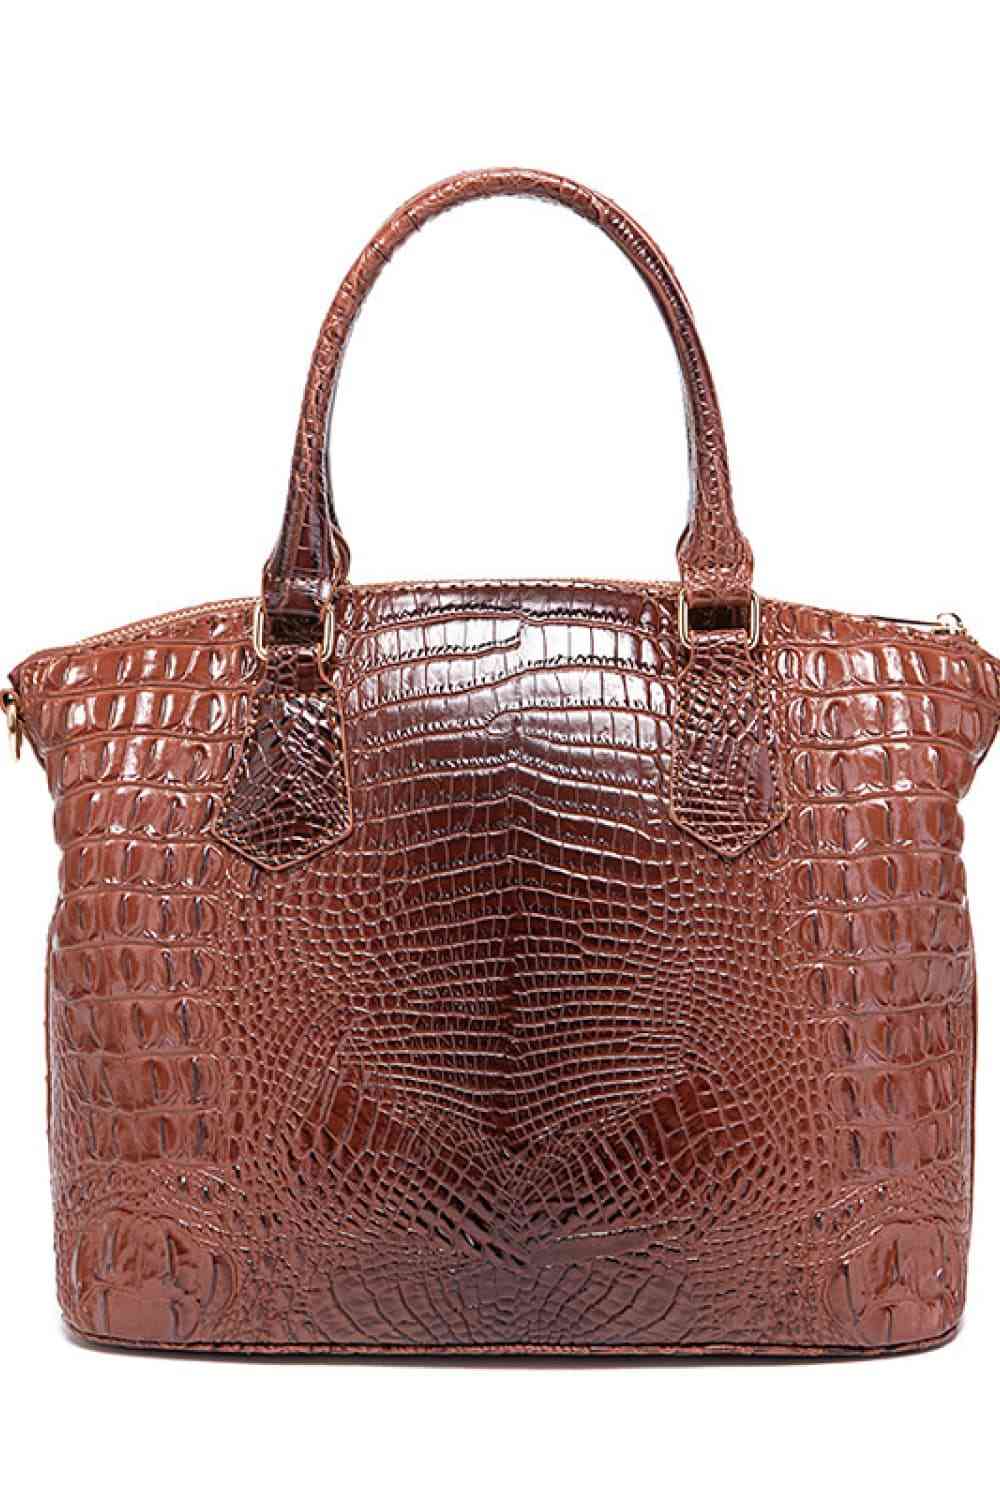 Designer PU Leather Handbag